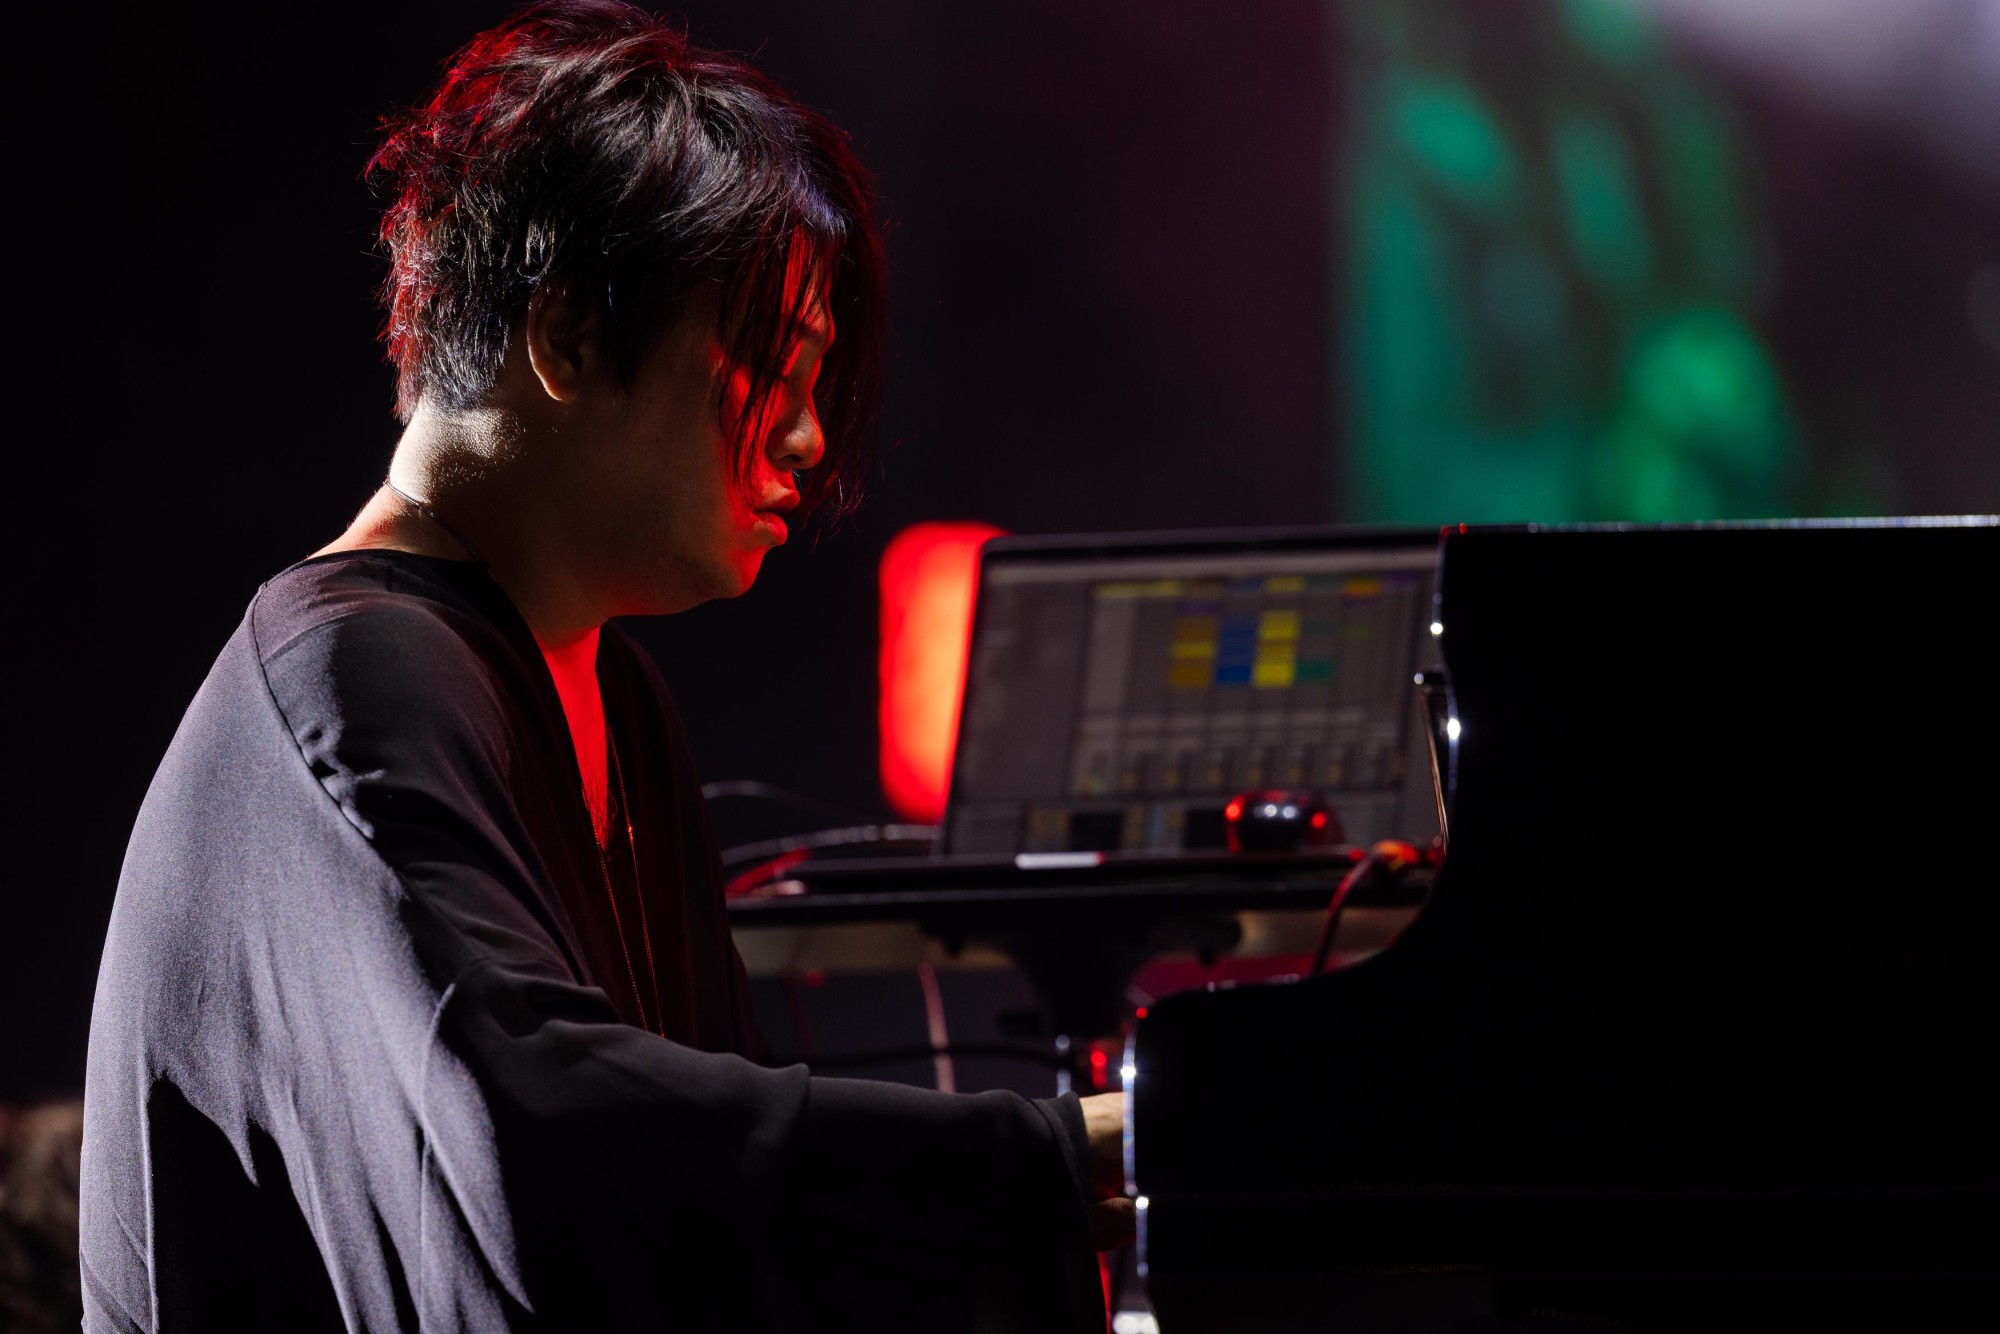 Android Opera “MIRROR” performance by Keiichiro Shibuya at Jubilee Stage m57808